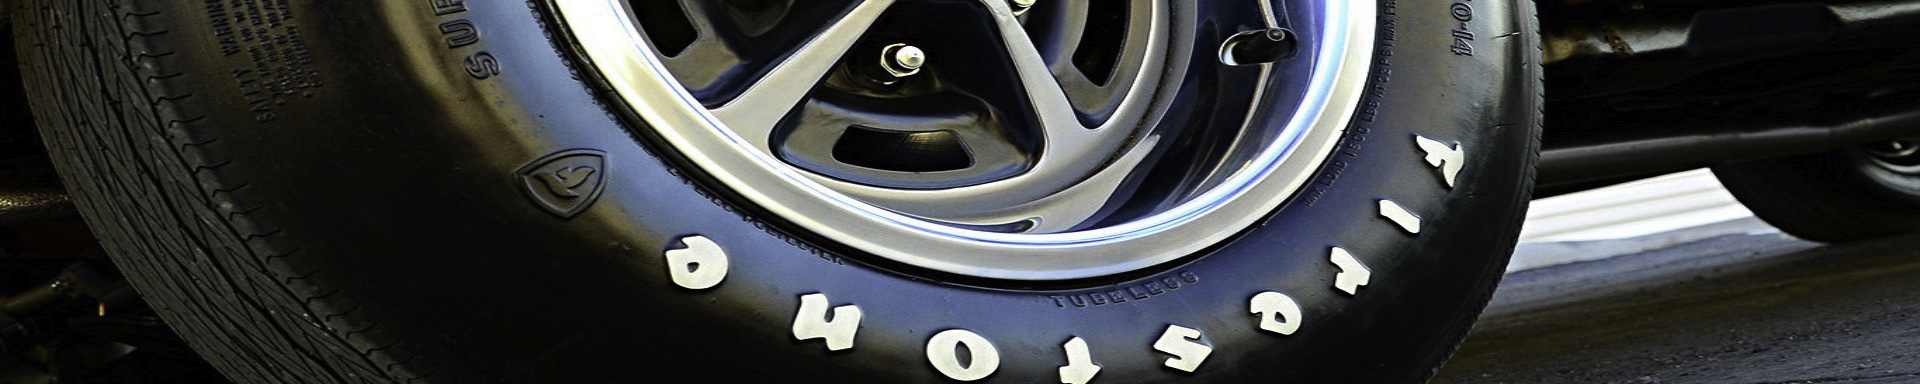 Classic, Muscle & Retro Car Tires | GarageAndFab.com | Munro Industries gf-100103080802